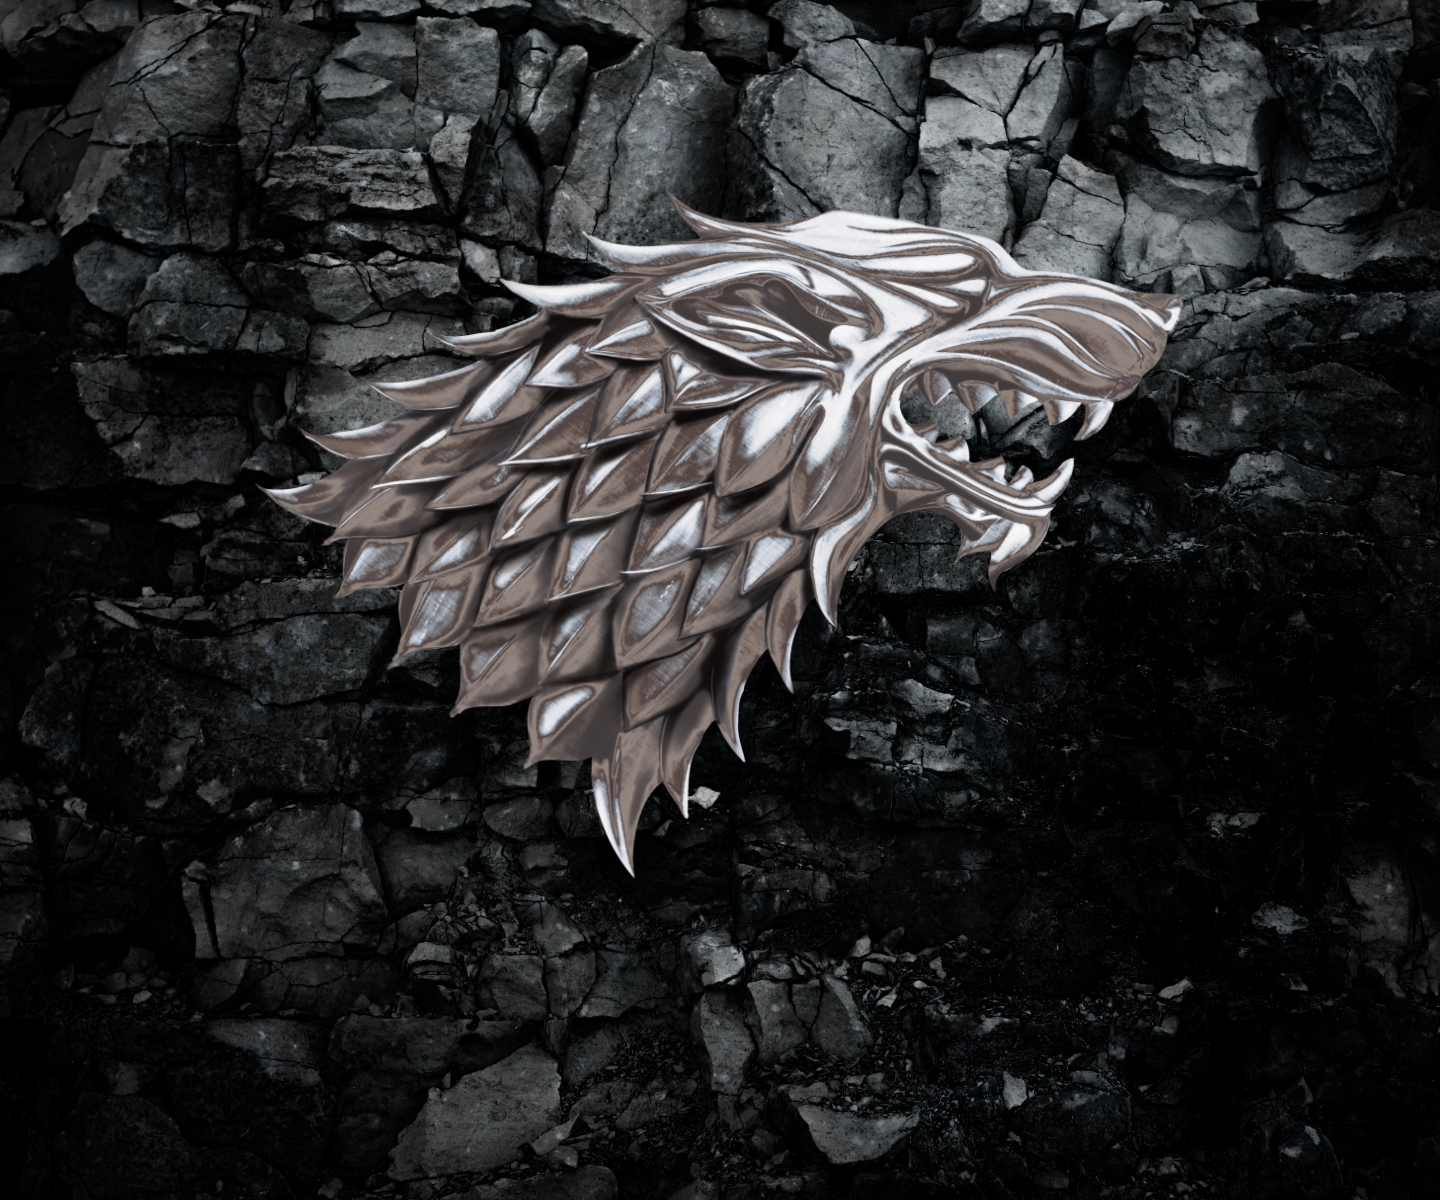 Game of Thrones – Warner Bros. Shop - UK